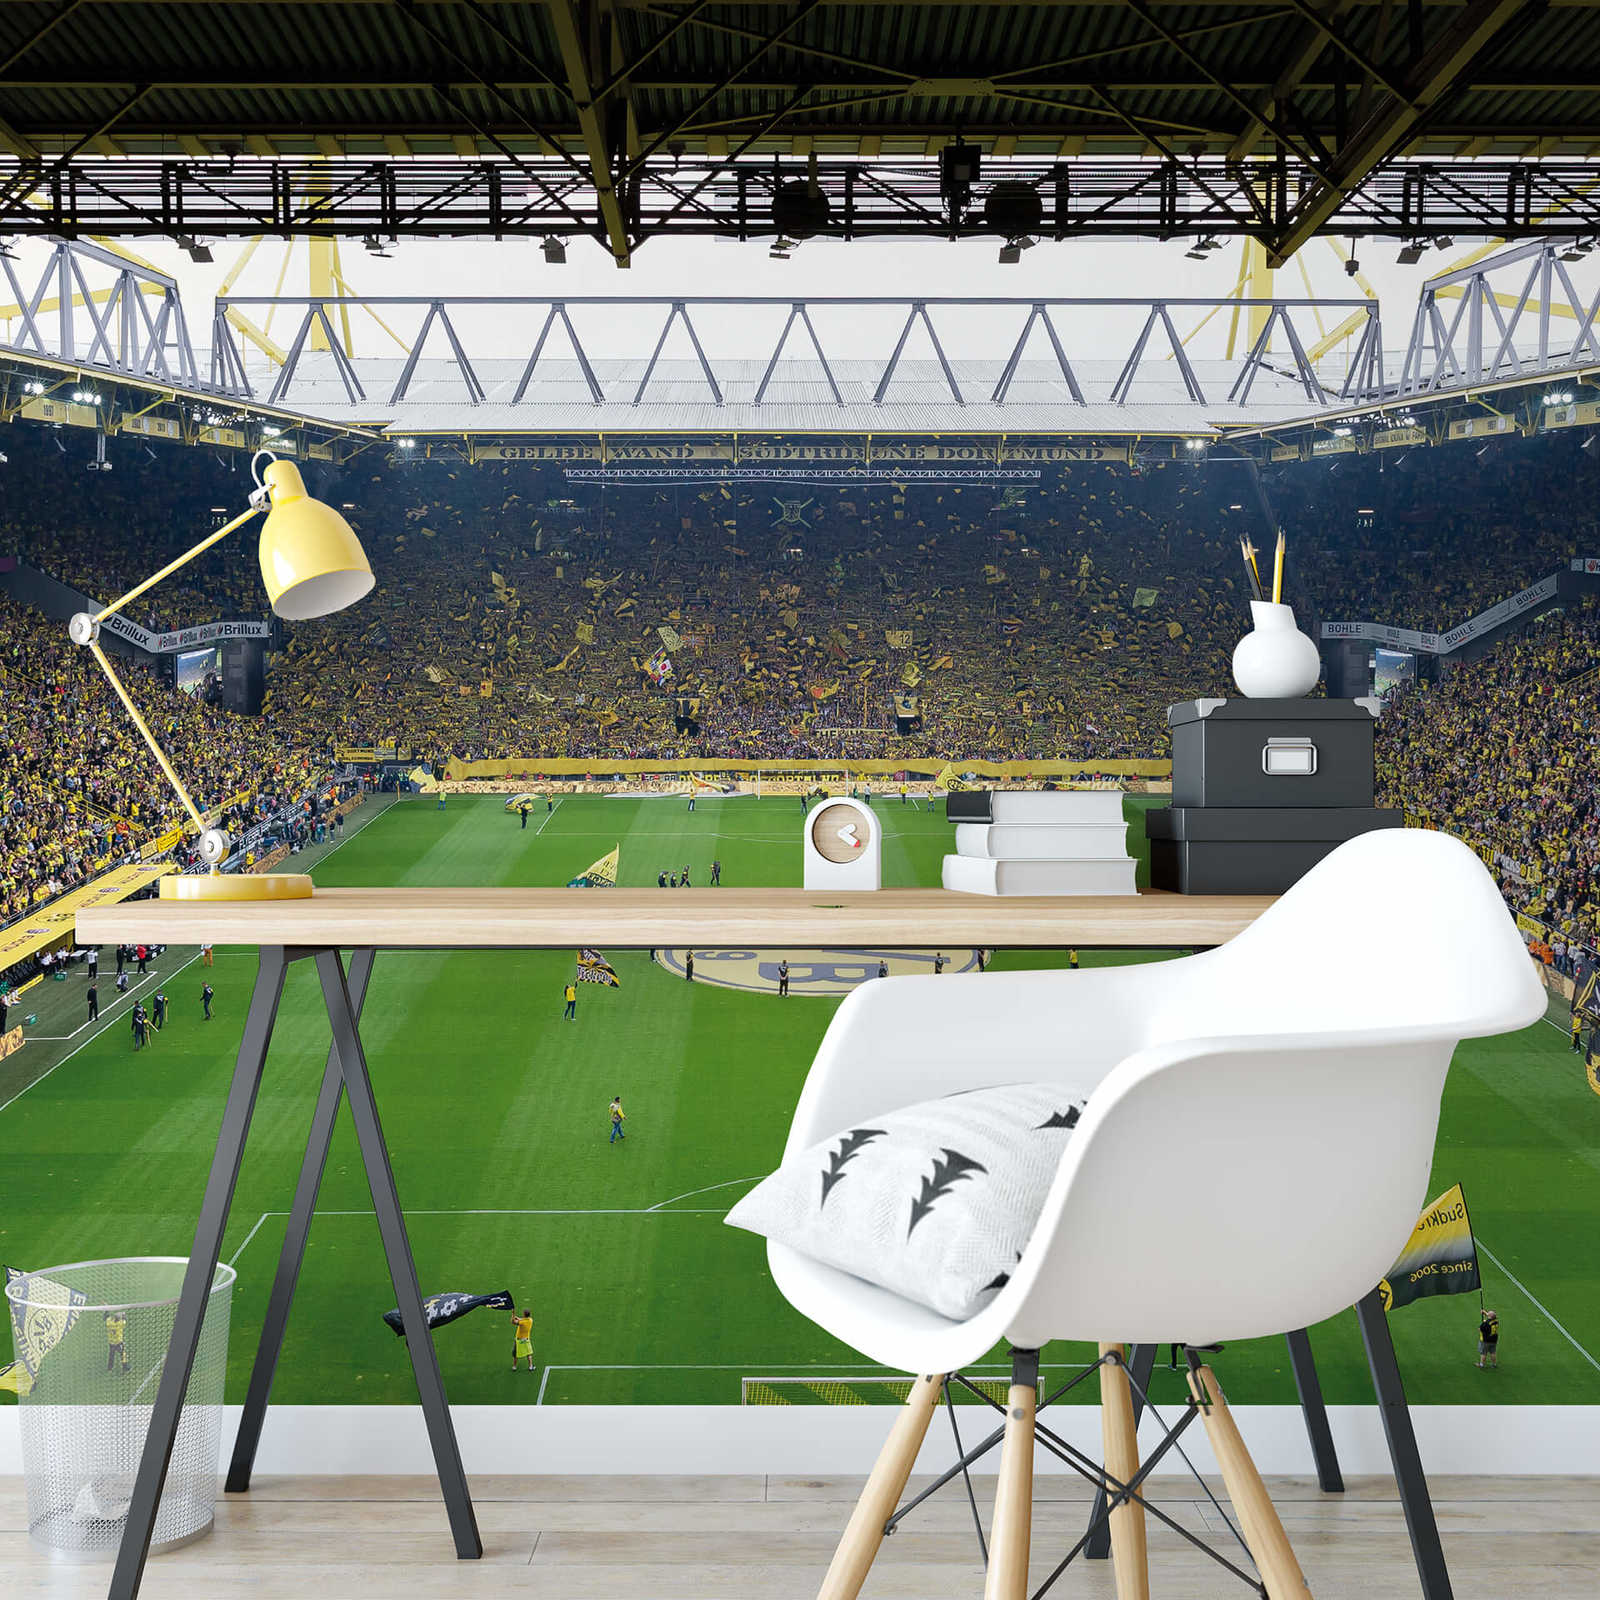             Fototapete Borussia Dortmund Stadion mit Chores
        